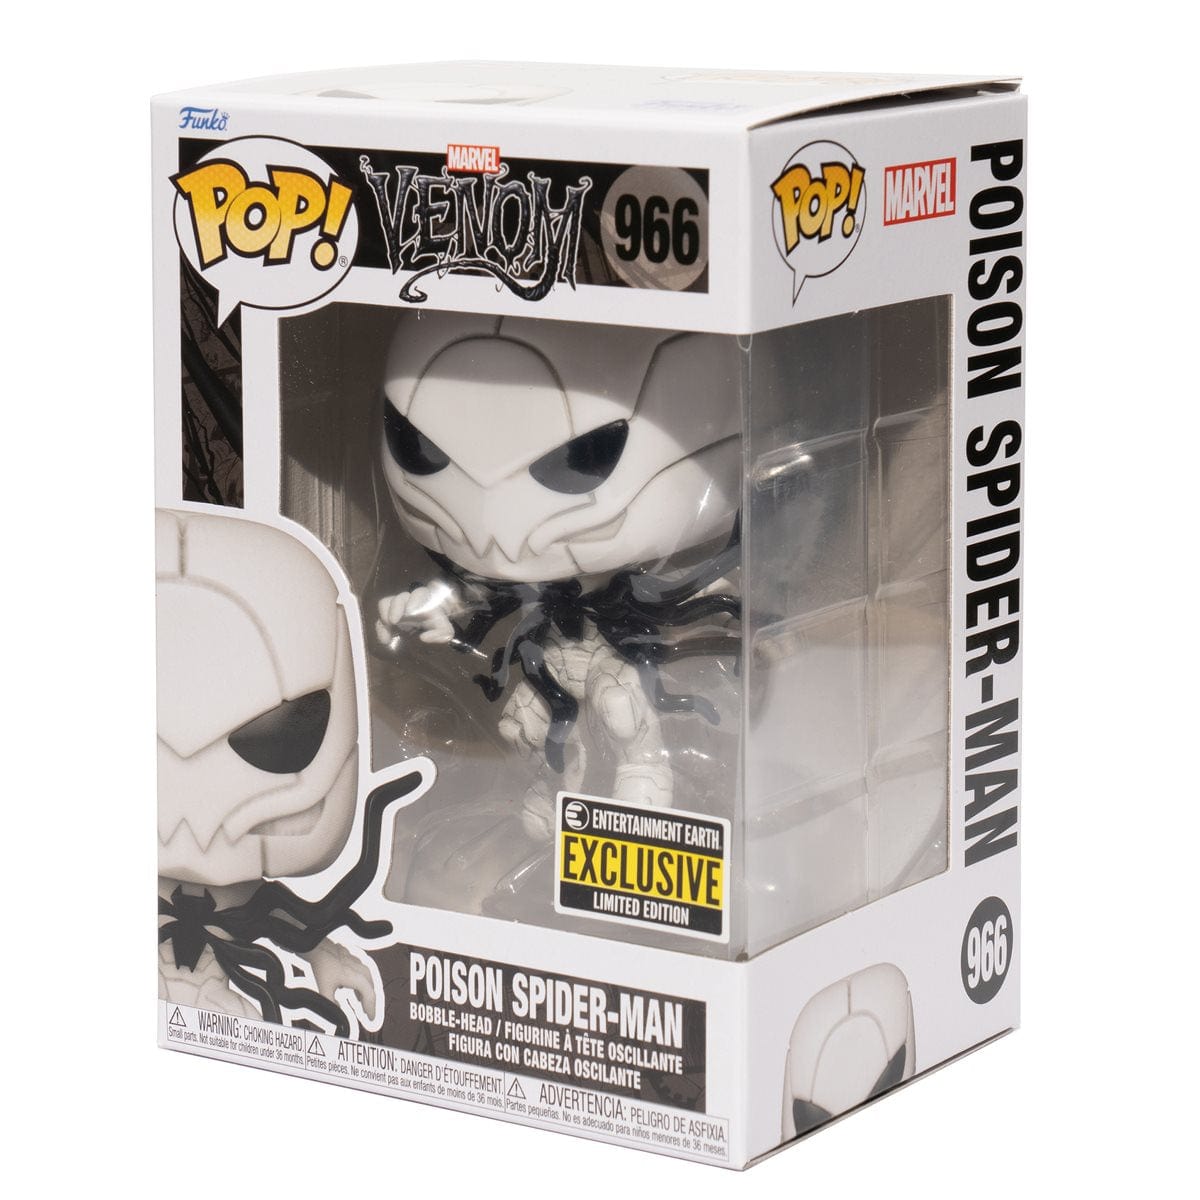 Venom Poison Spider-Man Pop! Vinyl Figure - Entertainment Earth Exclusive Media 6